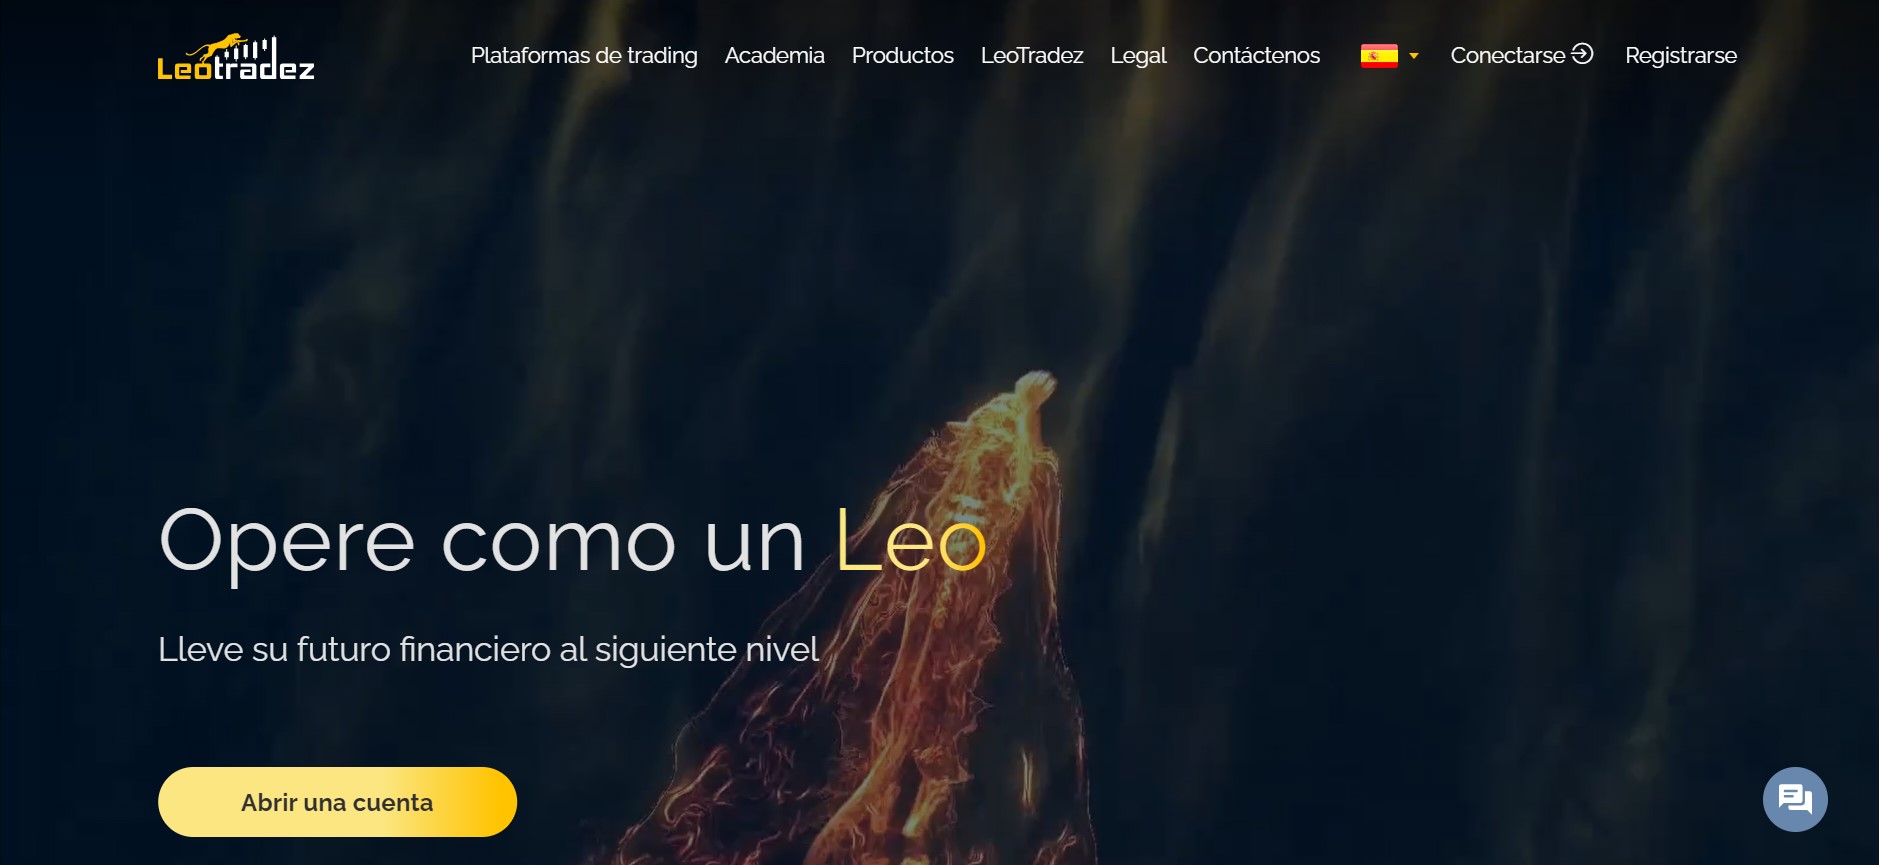 LeoTradez website